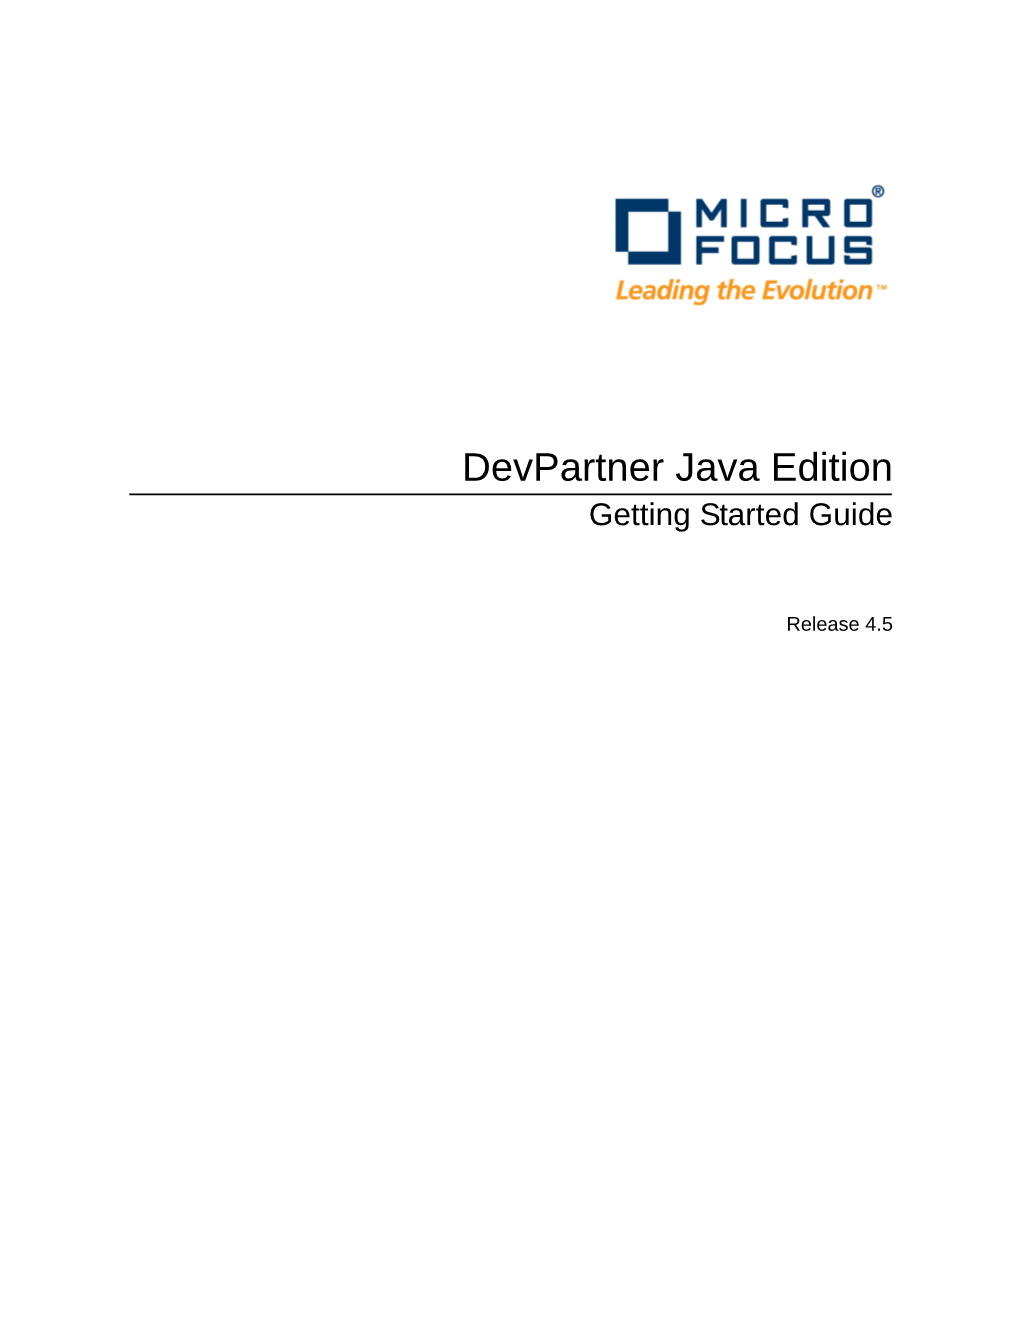 Devpartner Java Edition Getting Started Guide